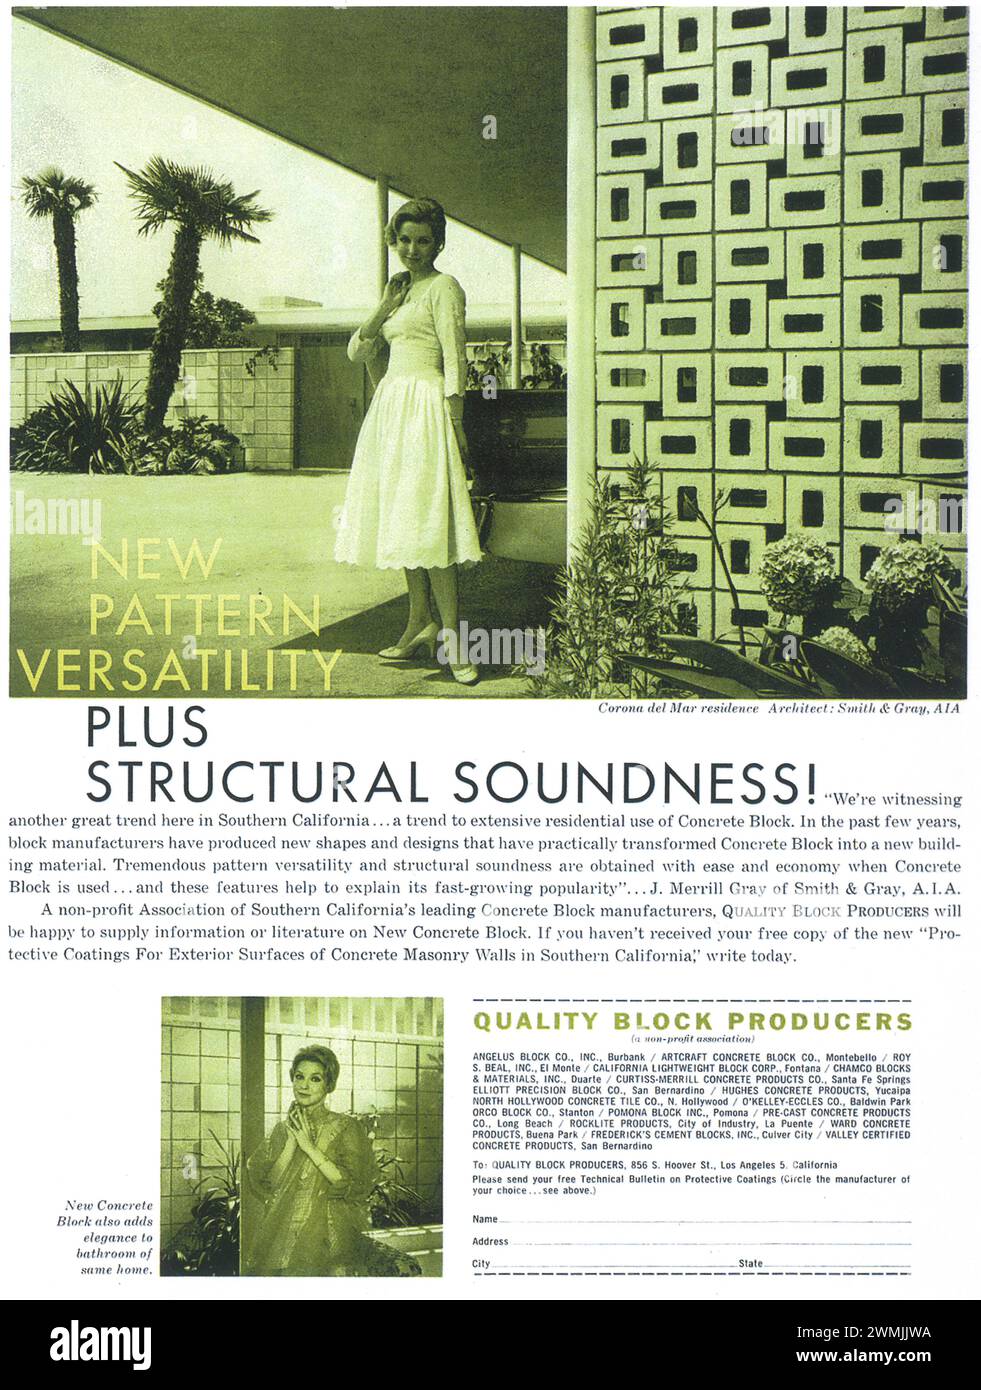 1959 Quality Block Producers Print Ad. Corona del Mar residence Southern California, Architect Smith & Gray Stock Photo